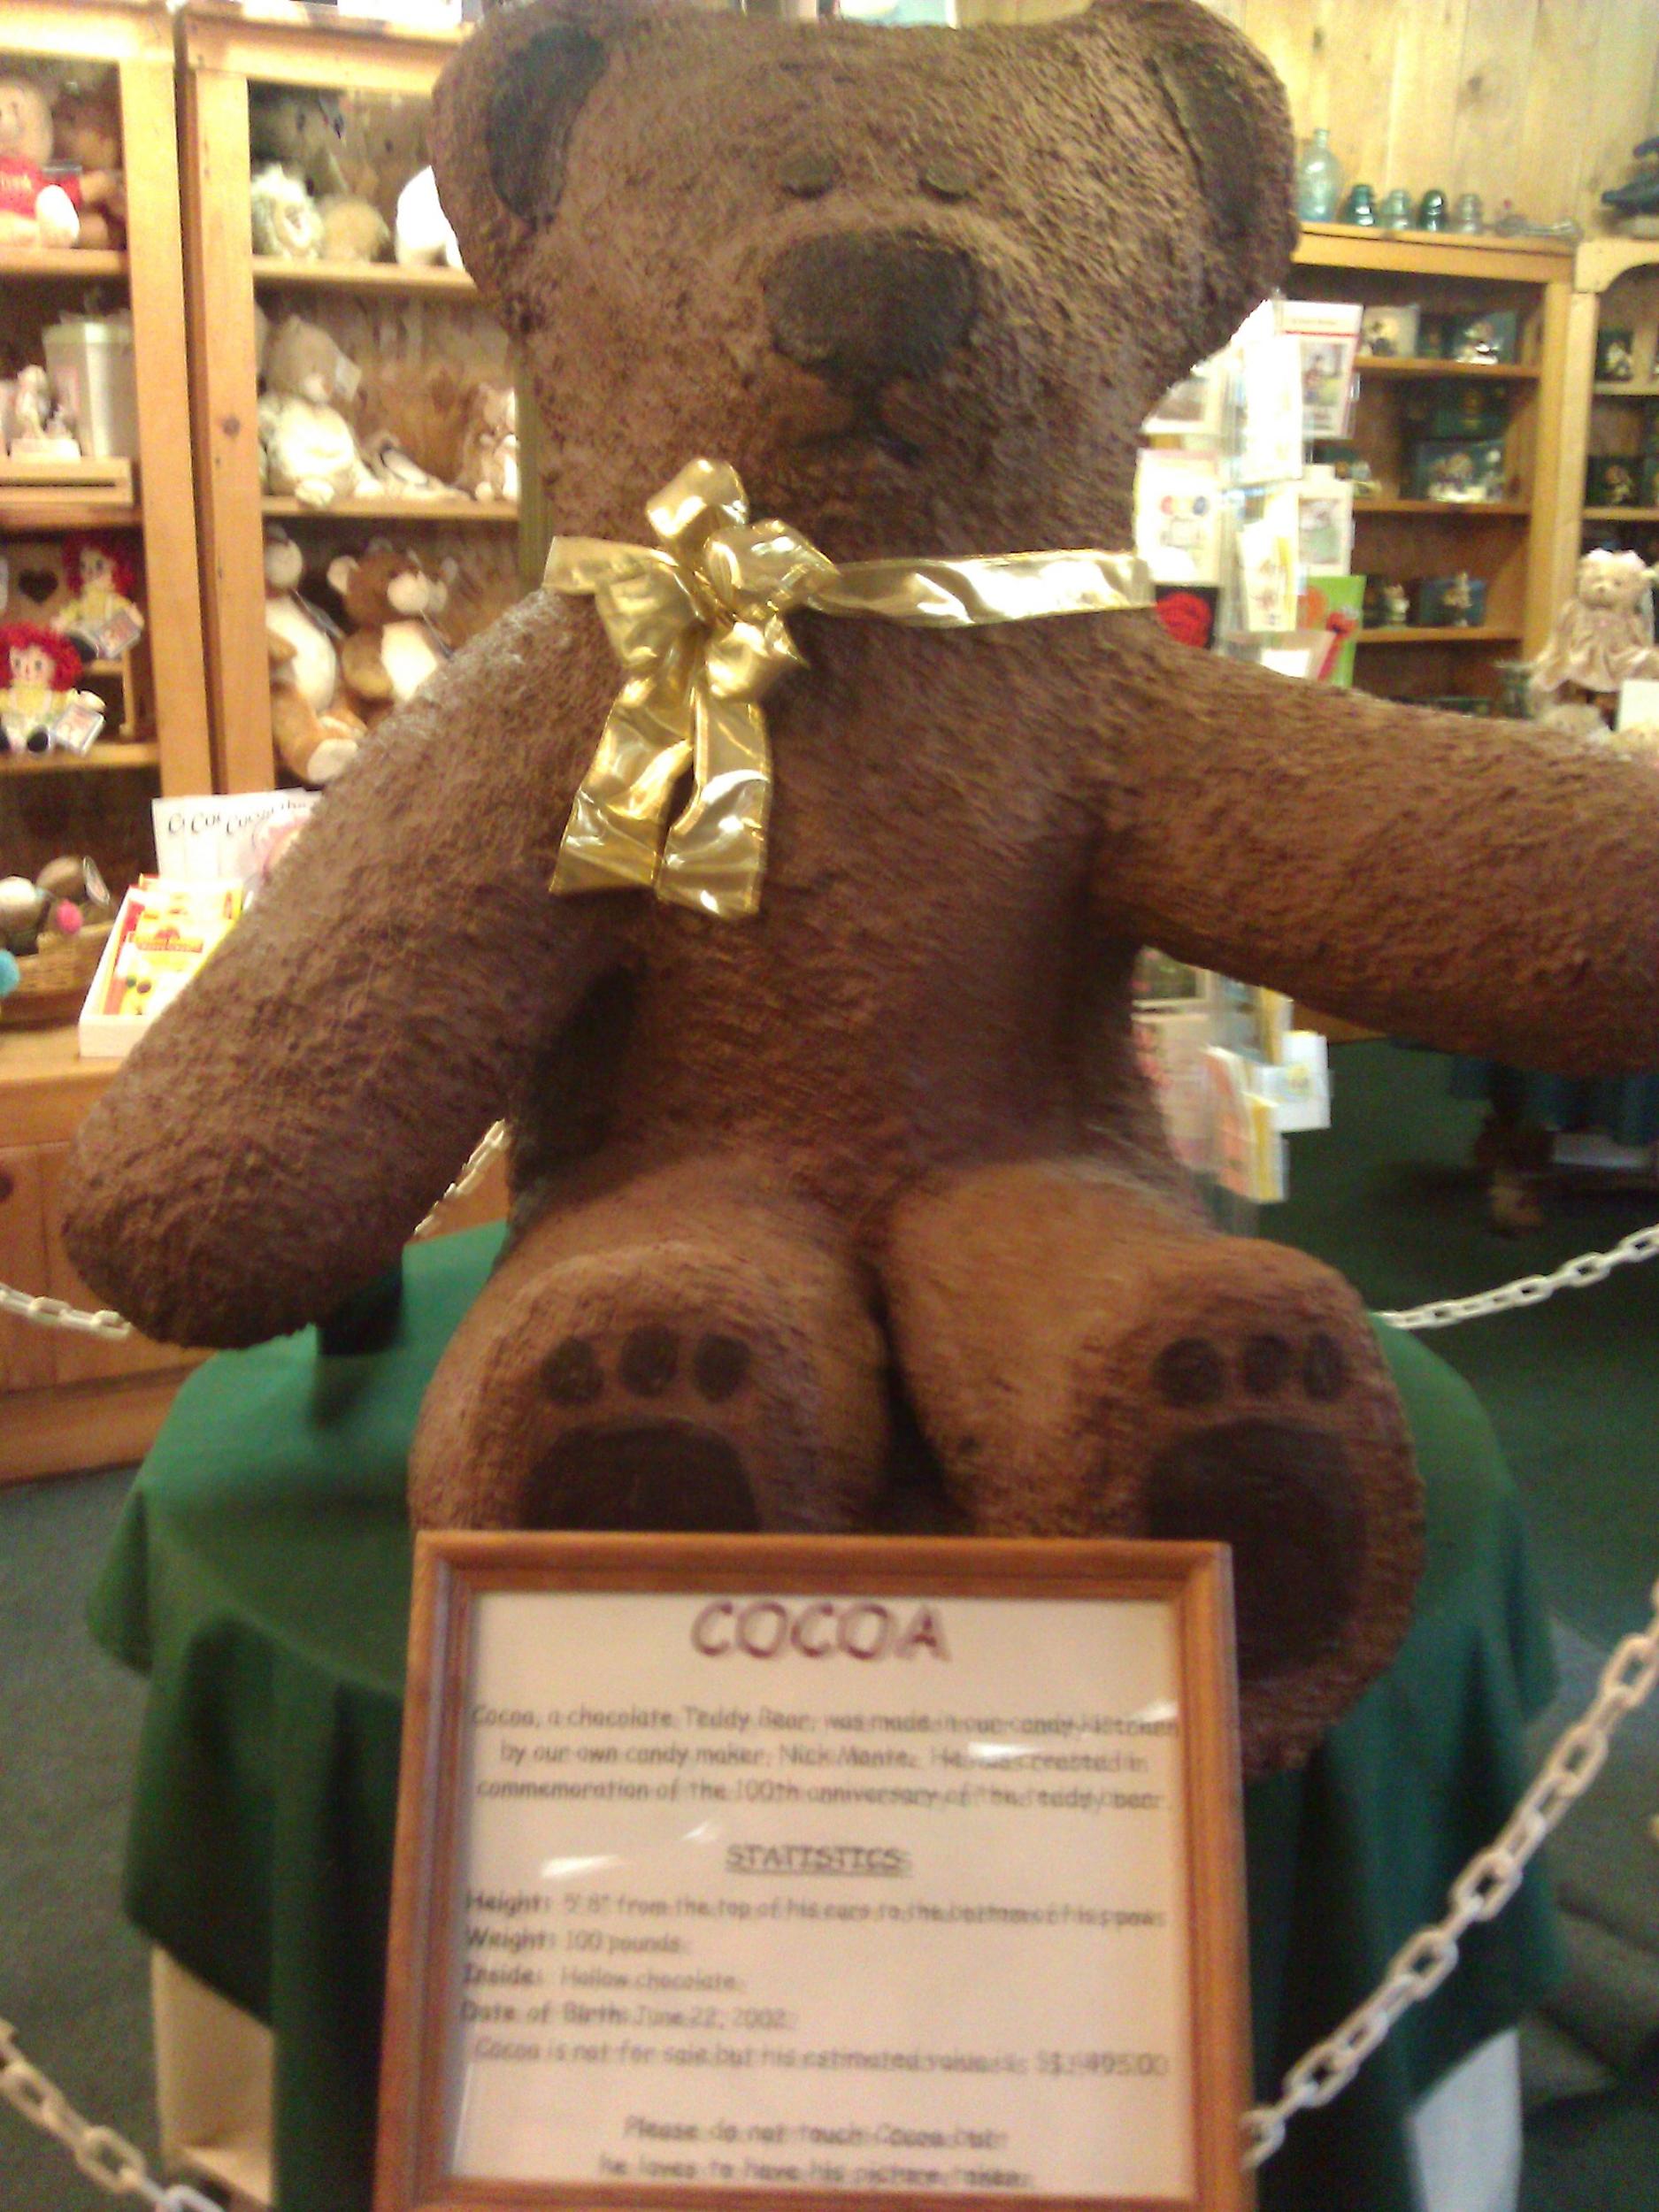 Cocoa The Bear